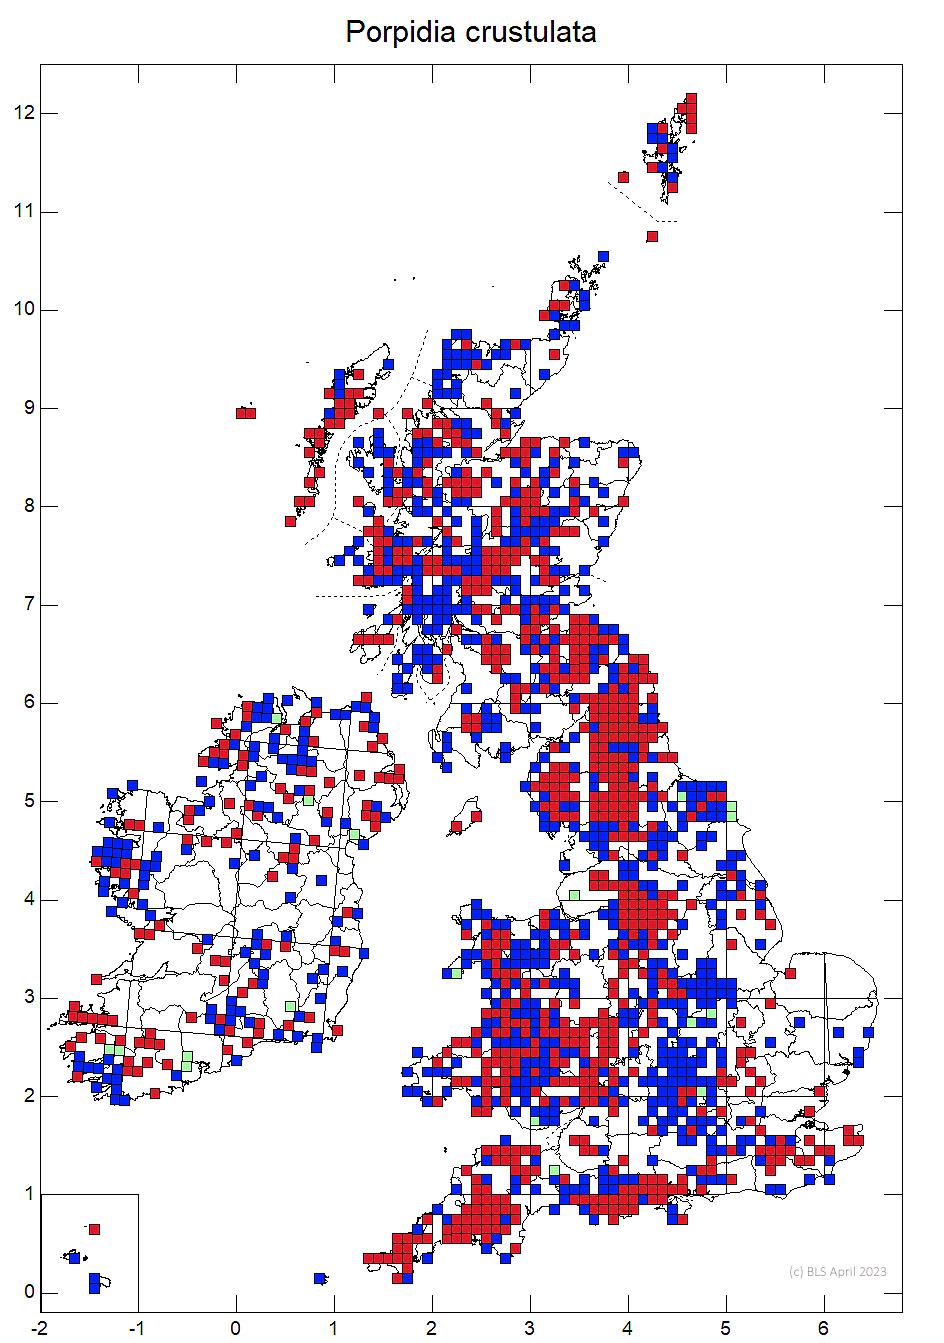 Porpidia crustulata 10km sq distribution map